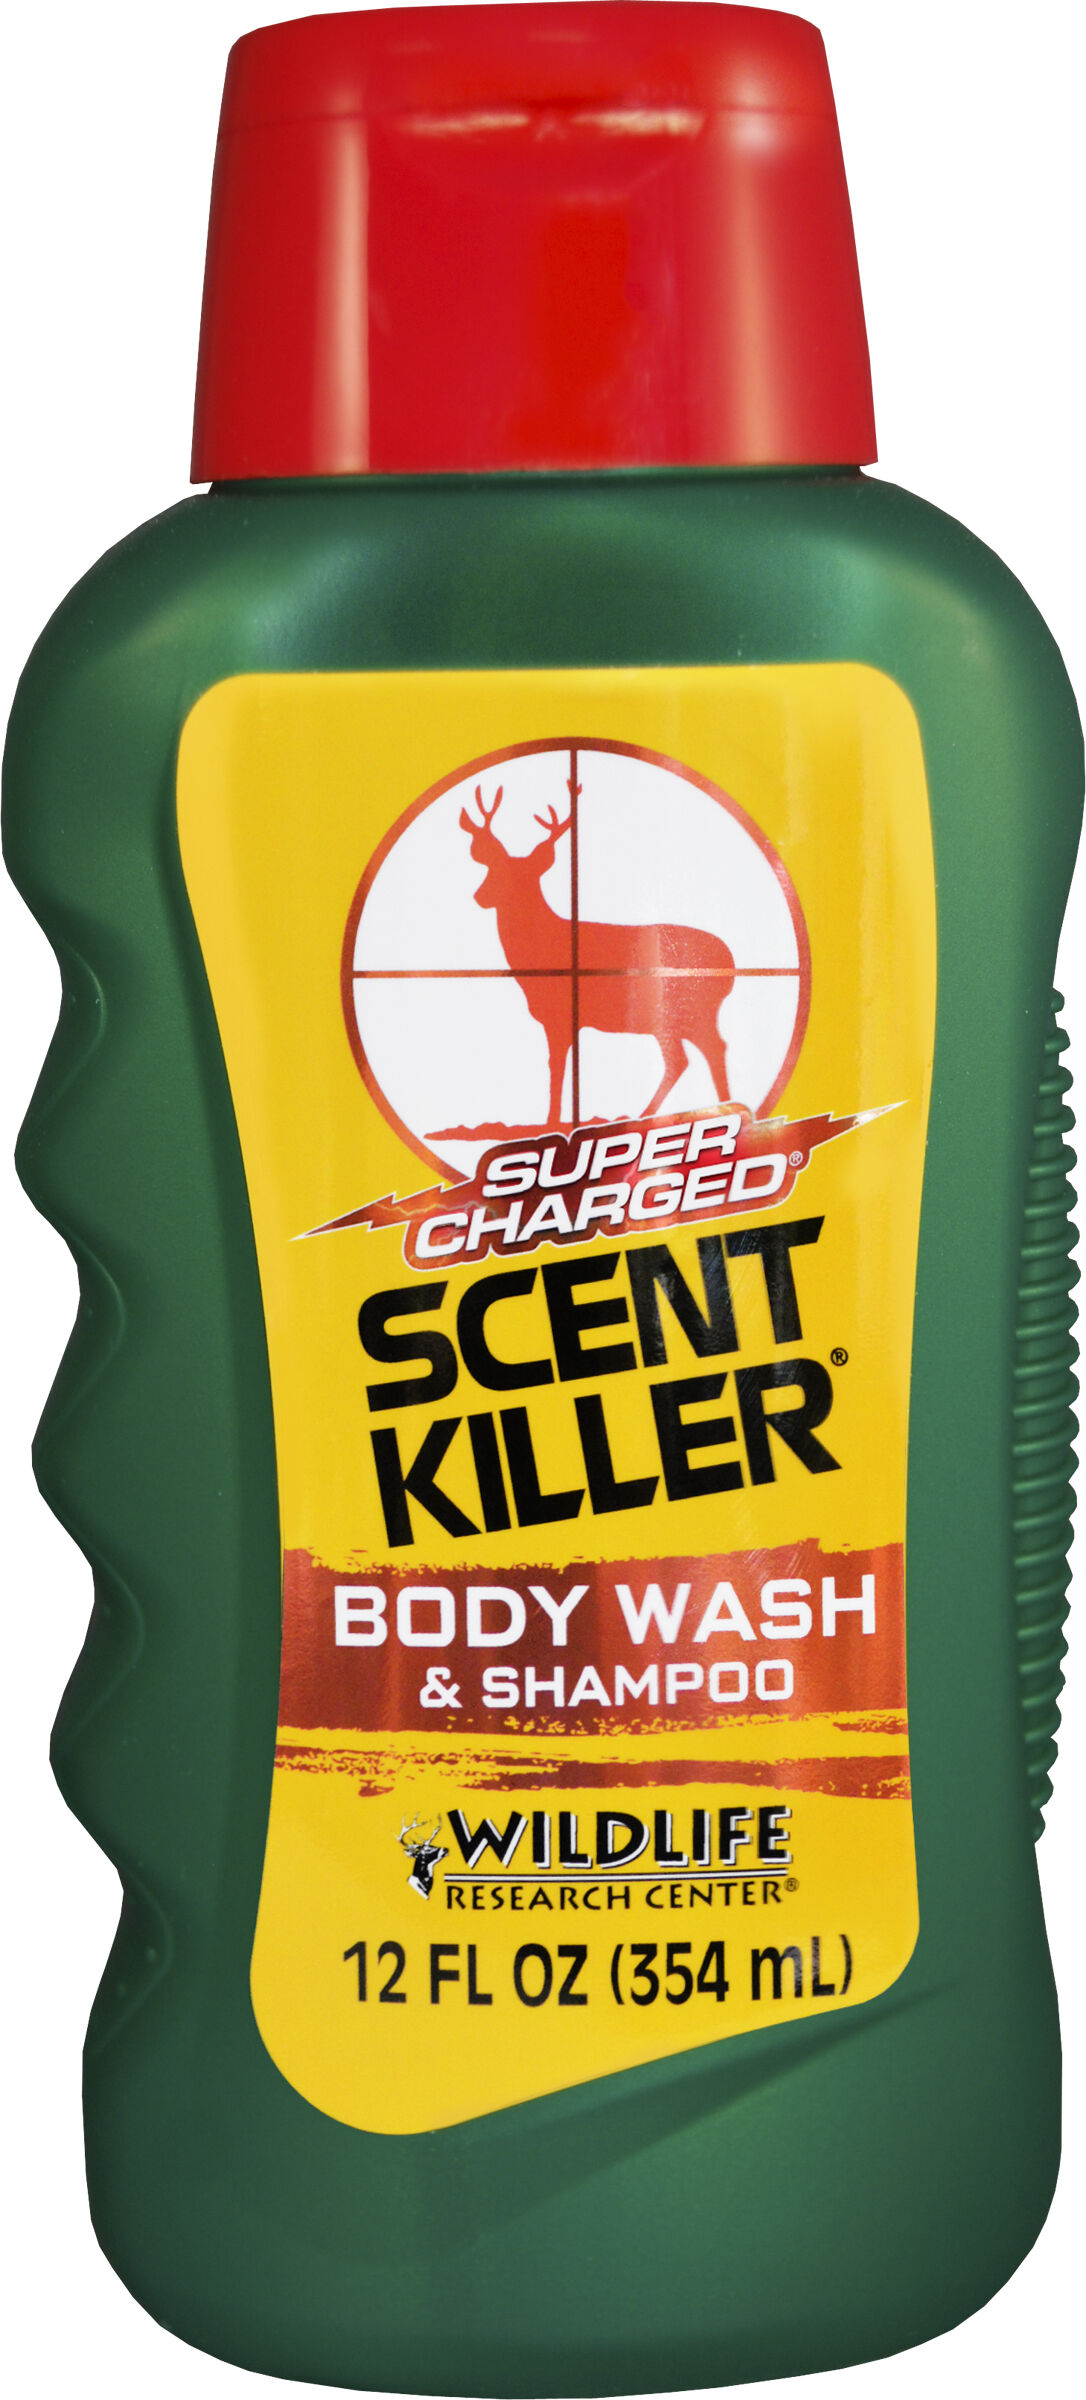 Super Charged Scent Killer Body Wash & Shampoo